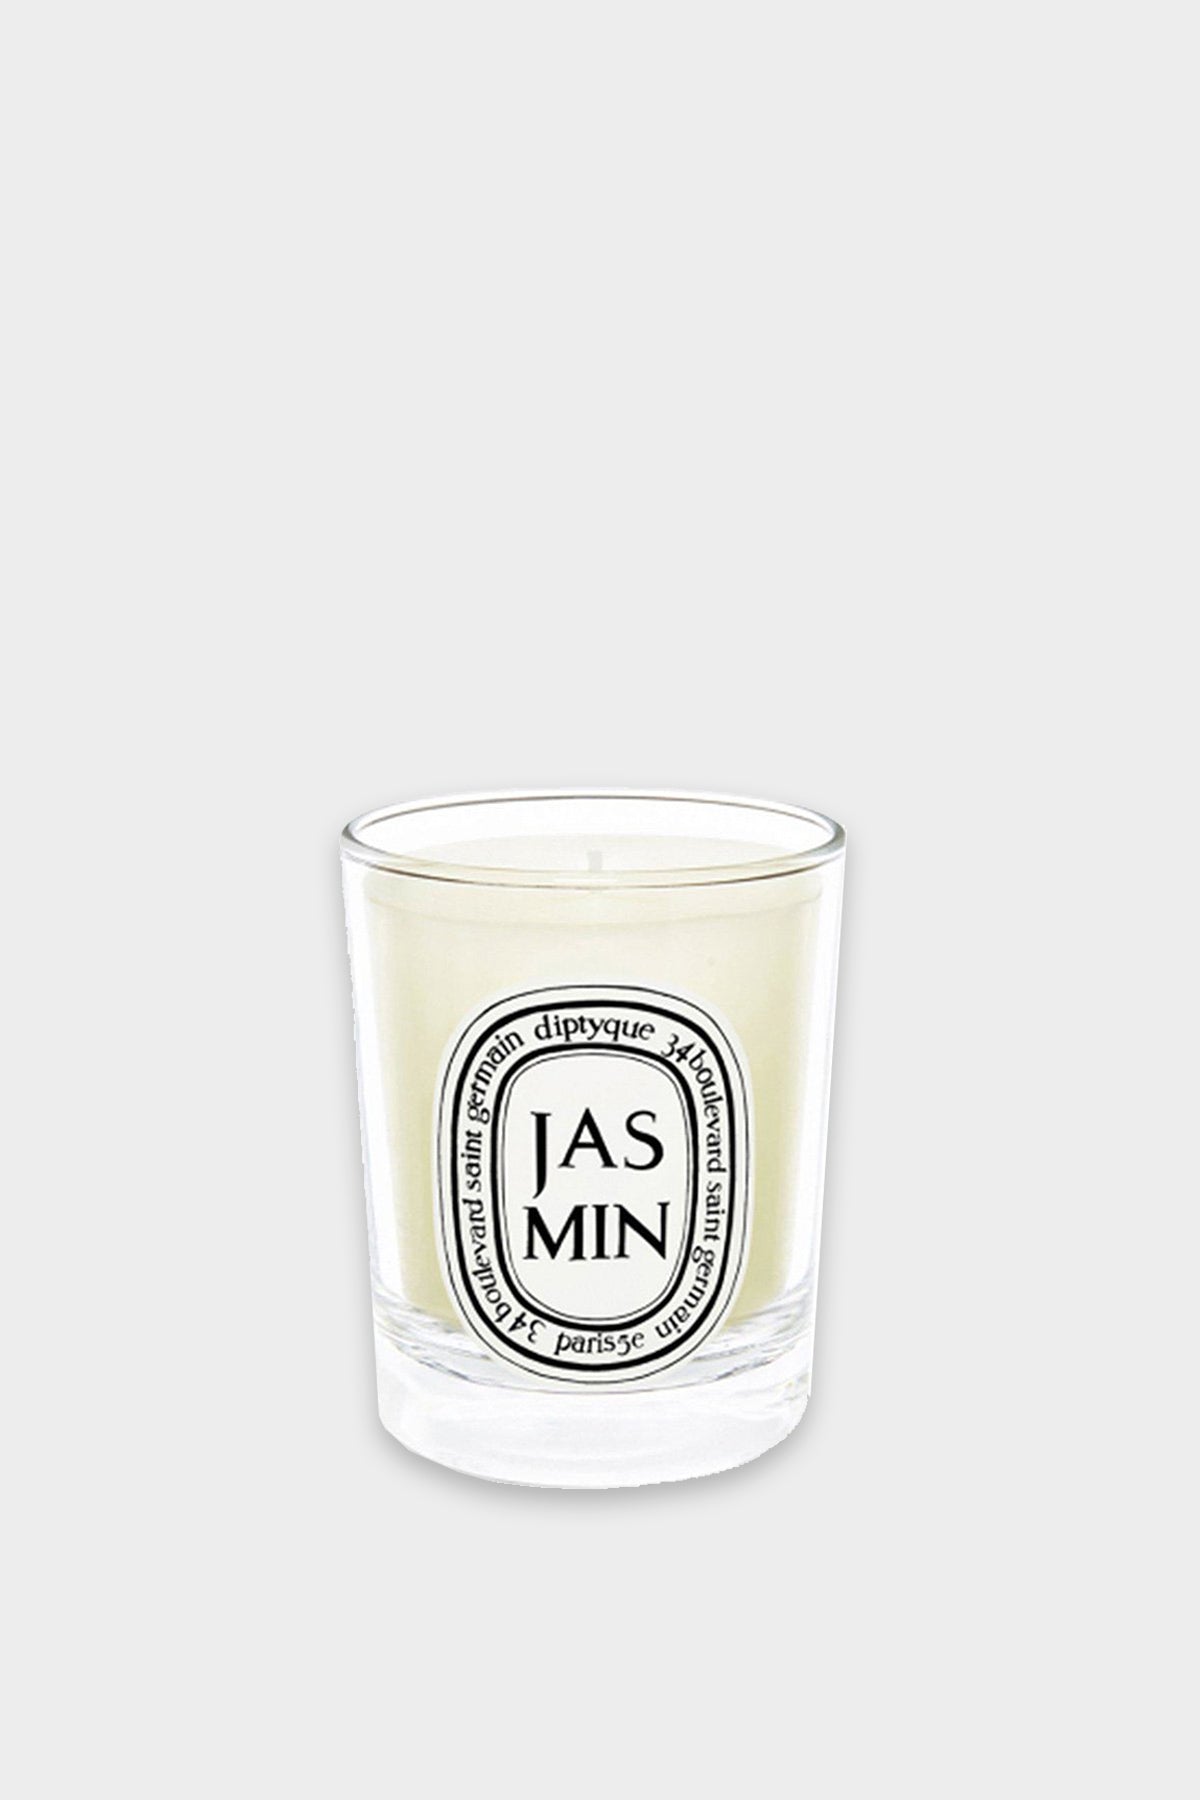 Jasmin Mini Candle - shop-olivia.com